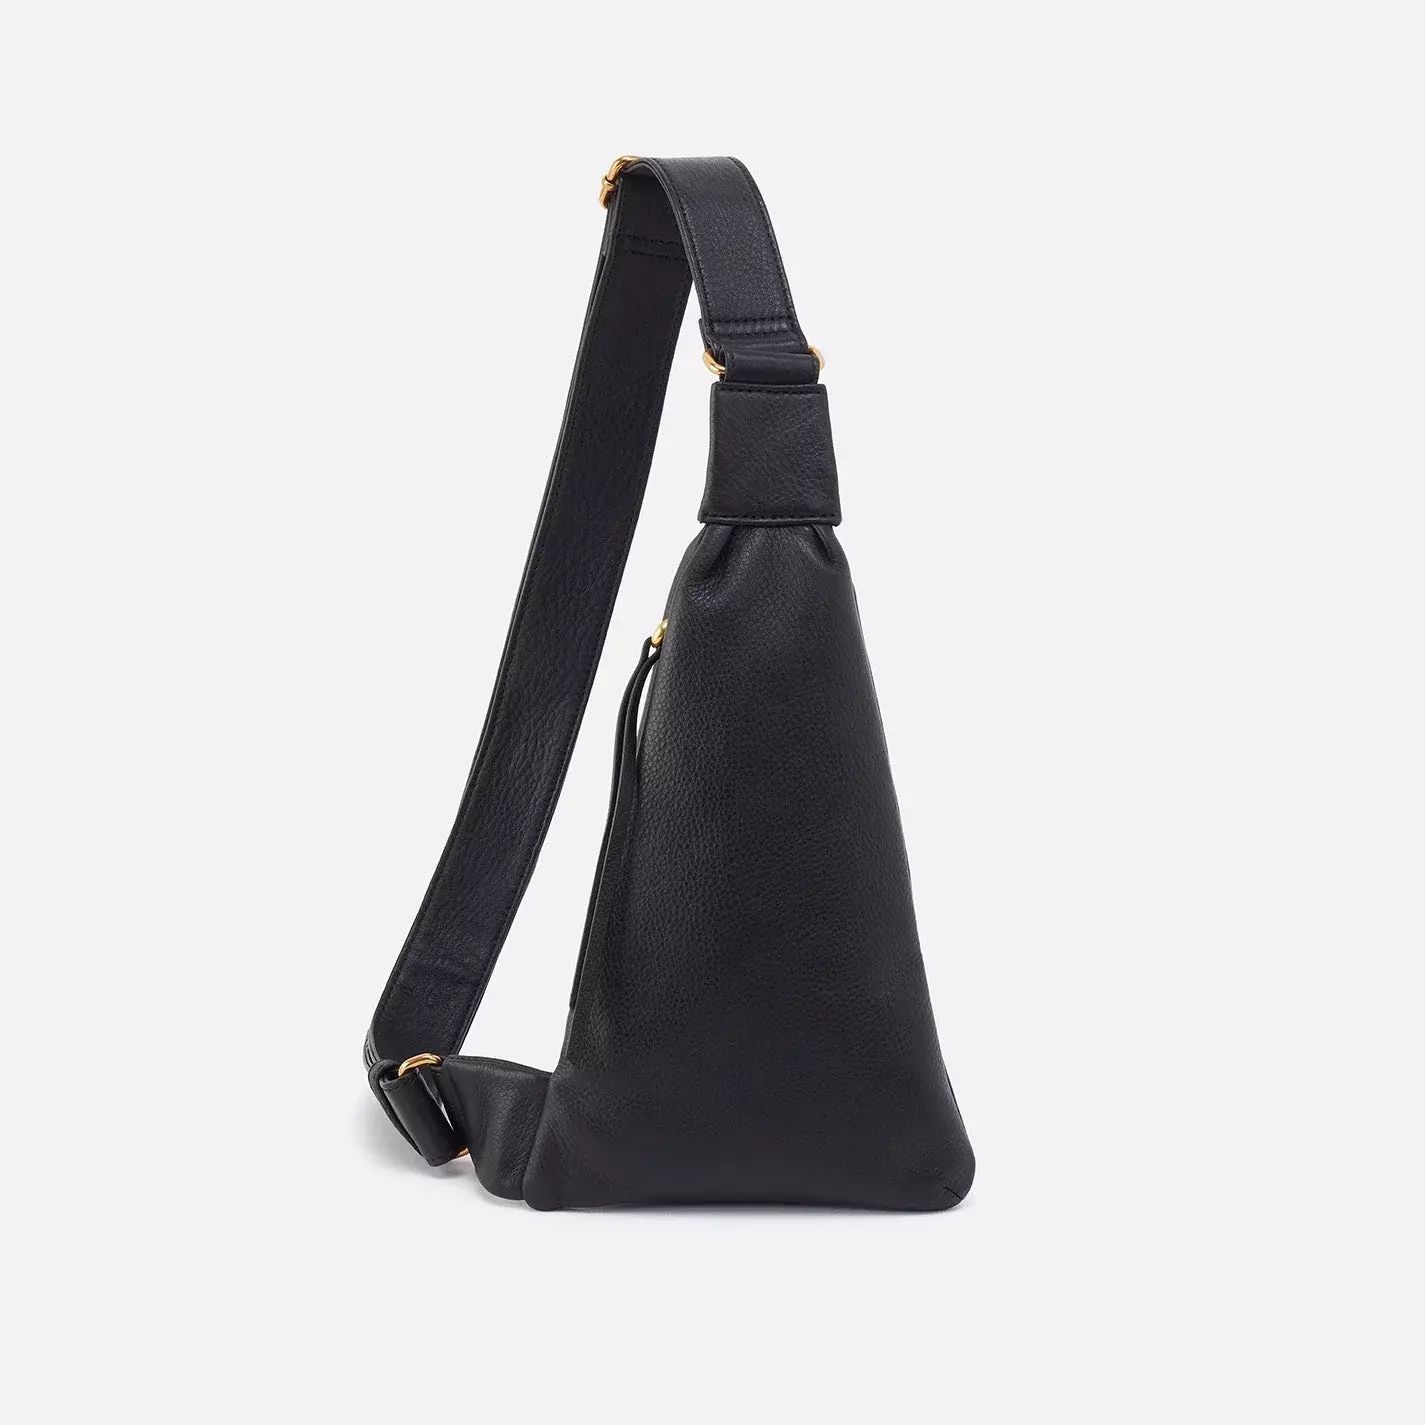 Bodhi Sling in Pebbled Leather - Black | HOBO Bags